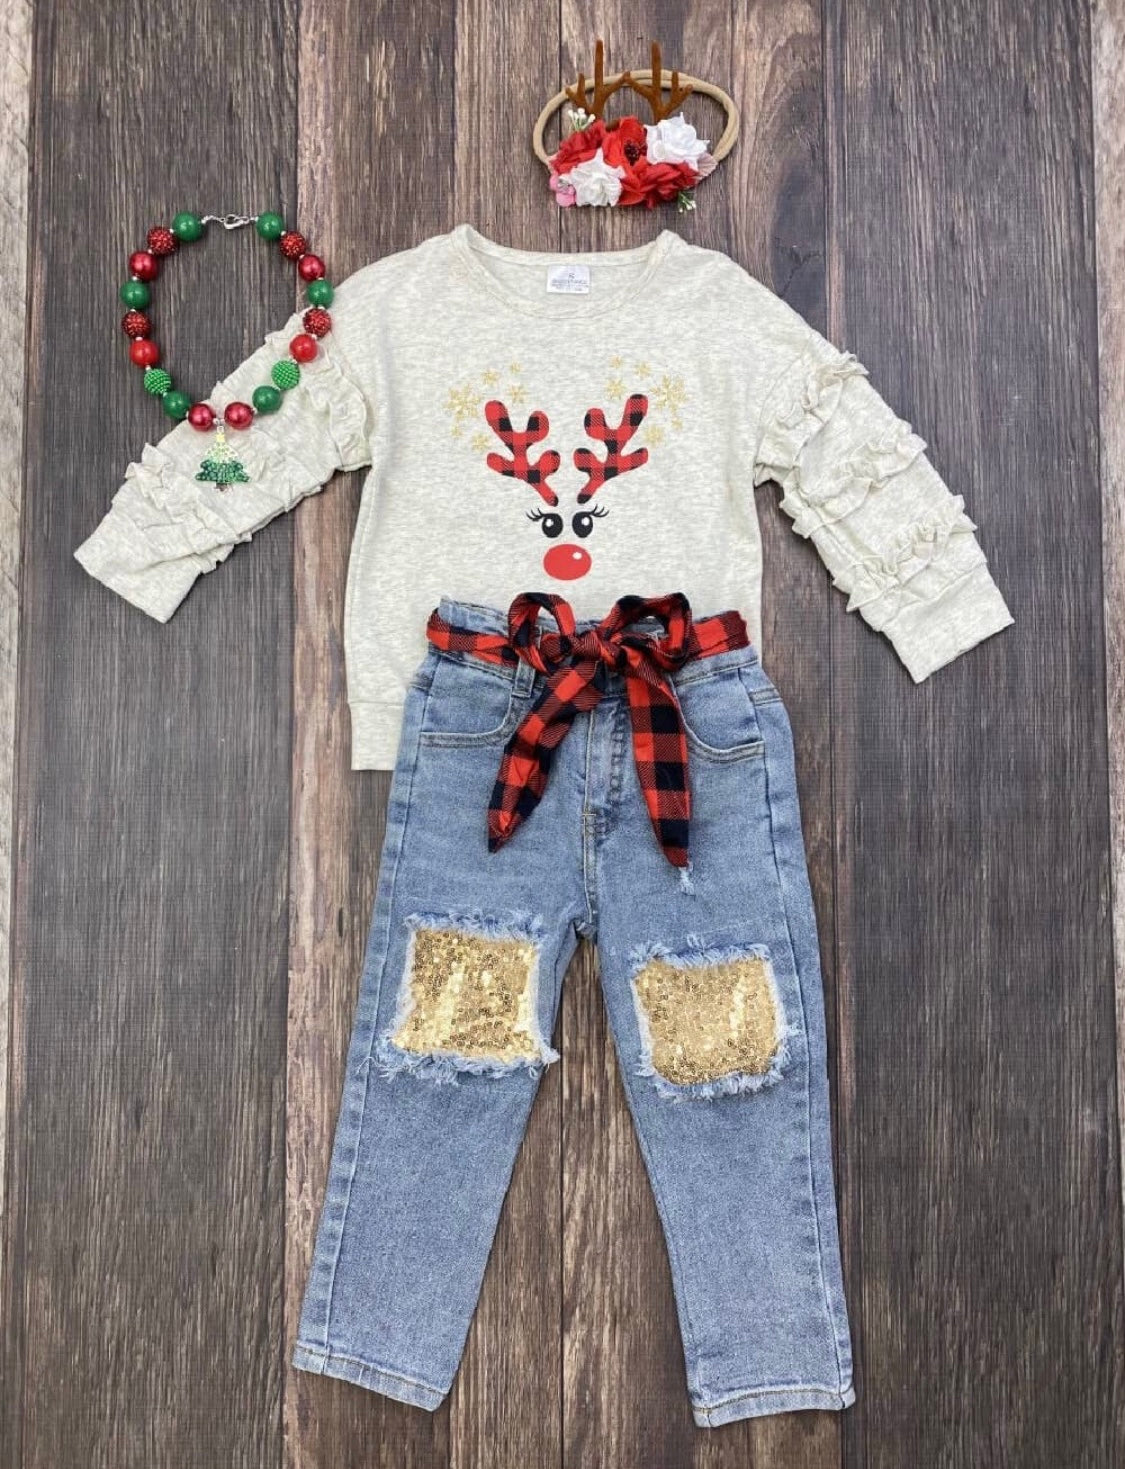 Reindeer shirt and cutout jeans